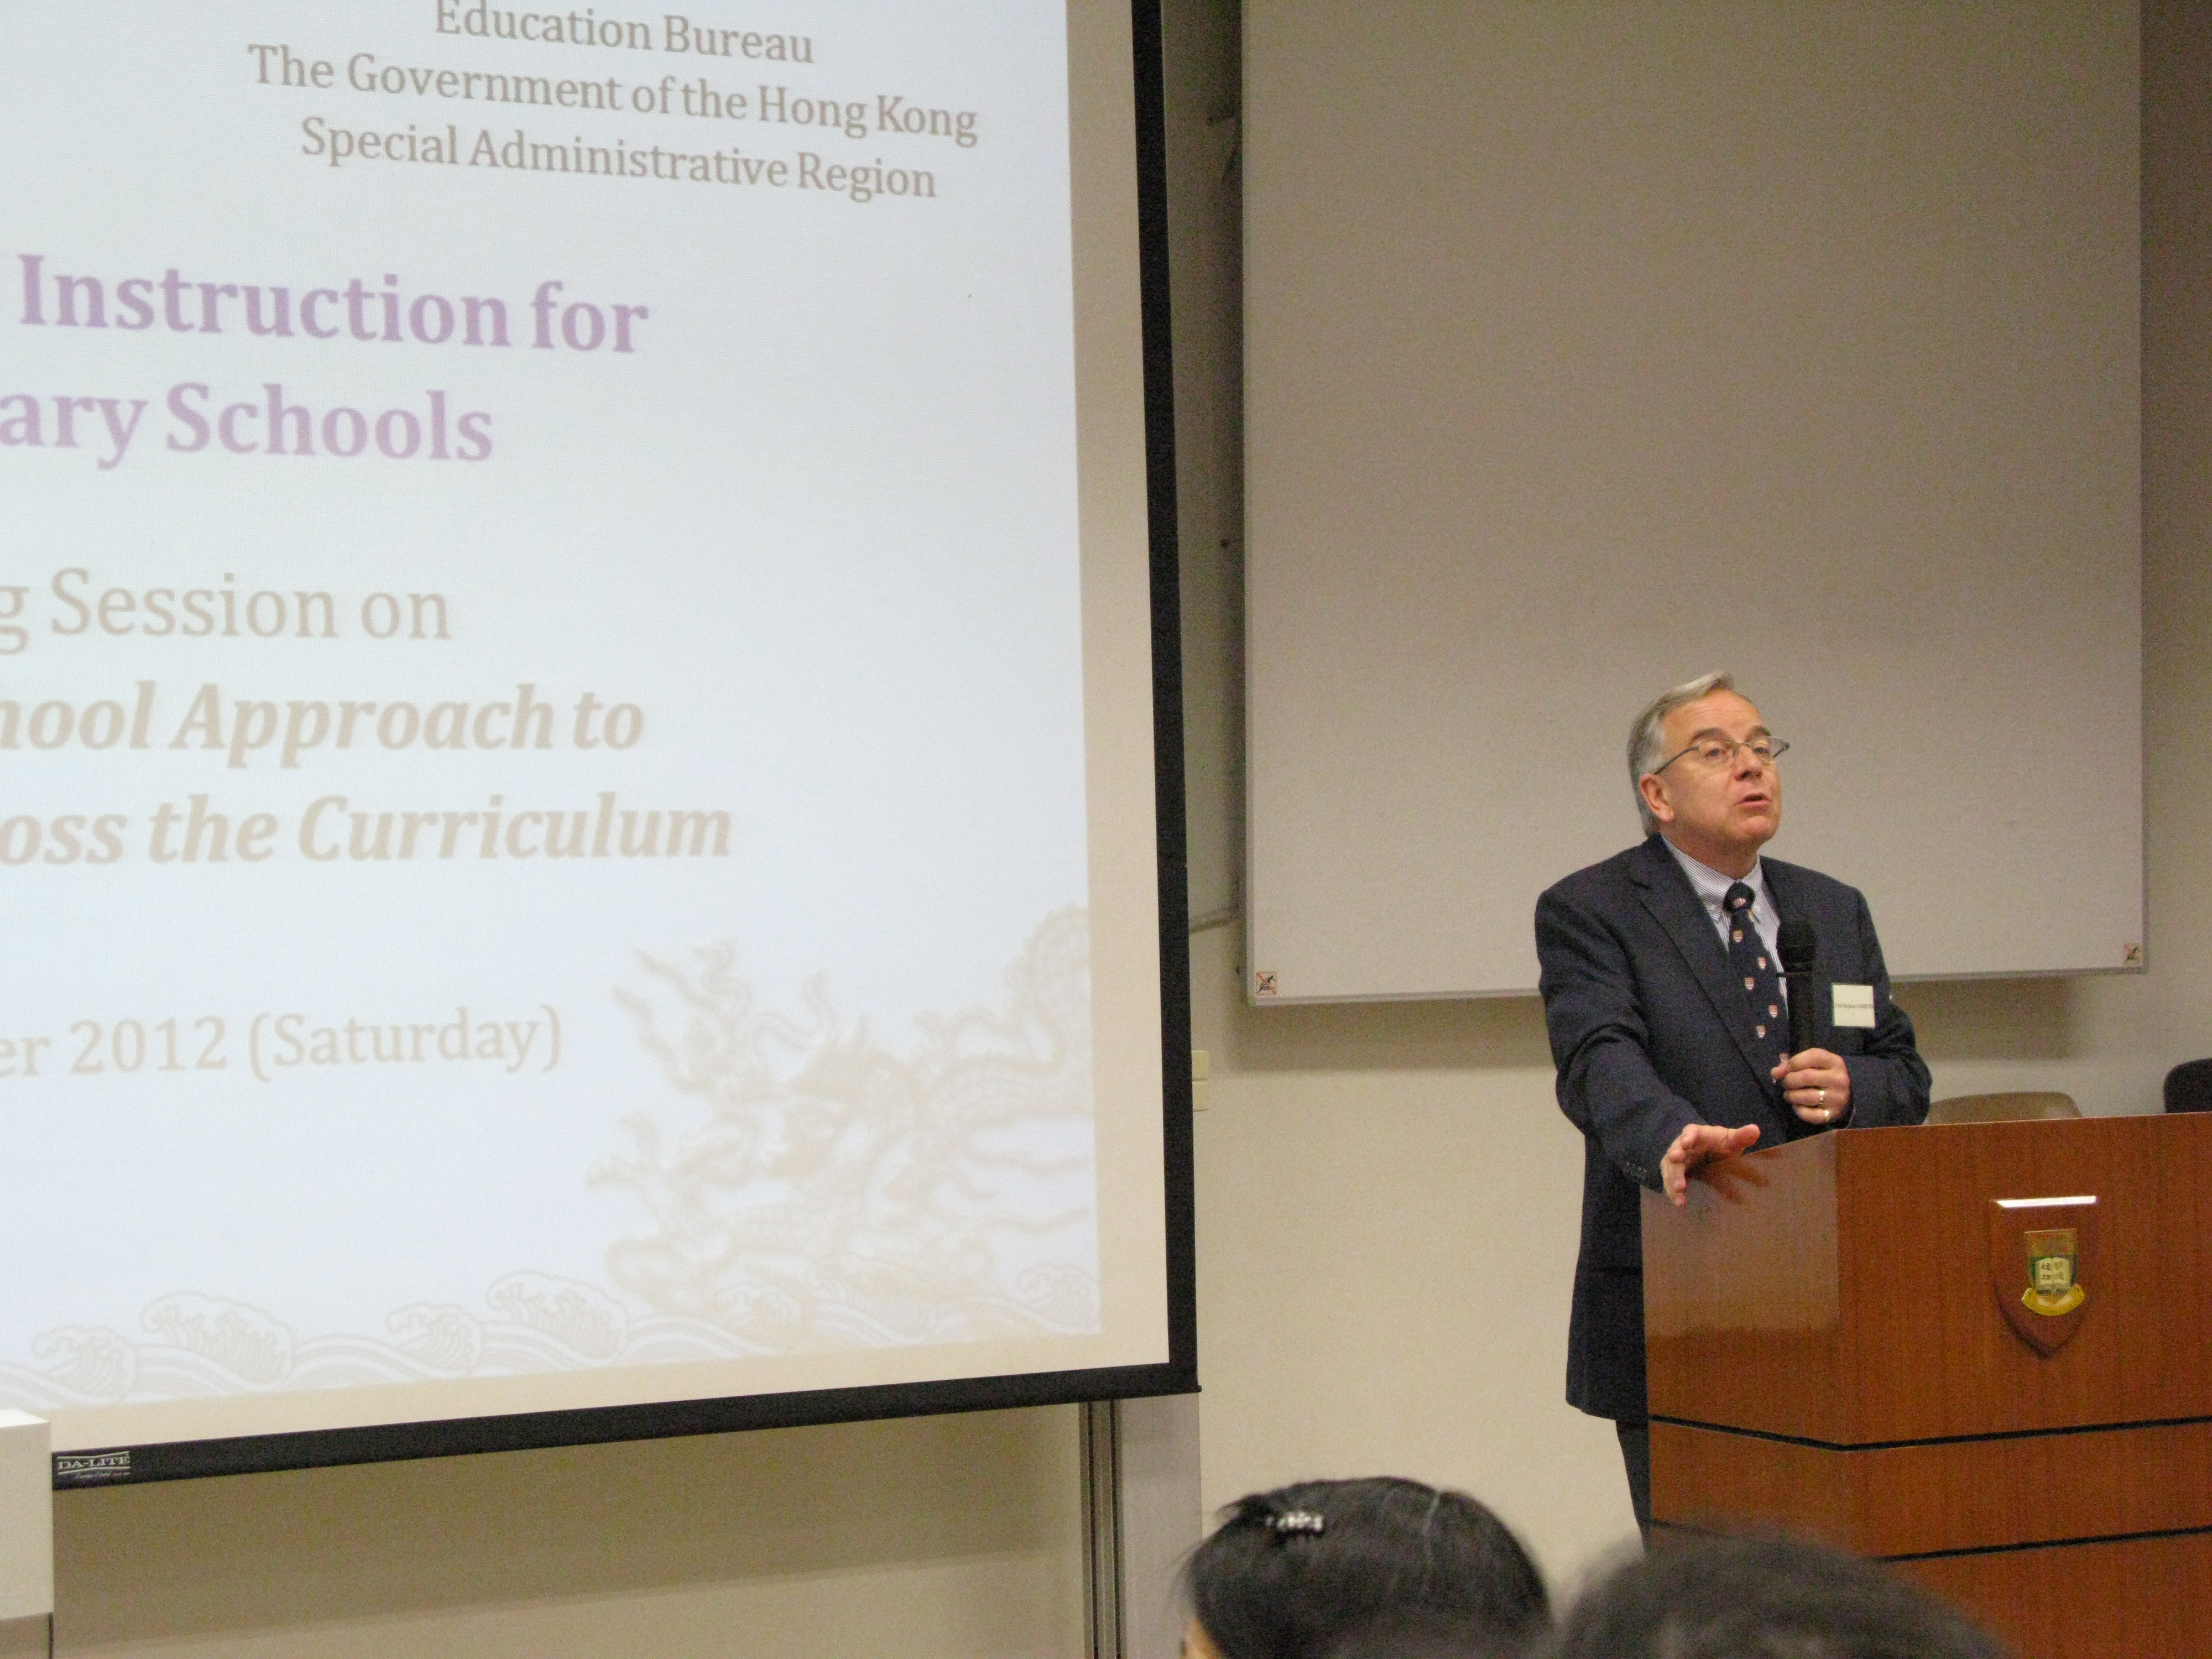 Professor Stephen ANDREWS, Dean, Faculty of Education, The University of Hong Kong,